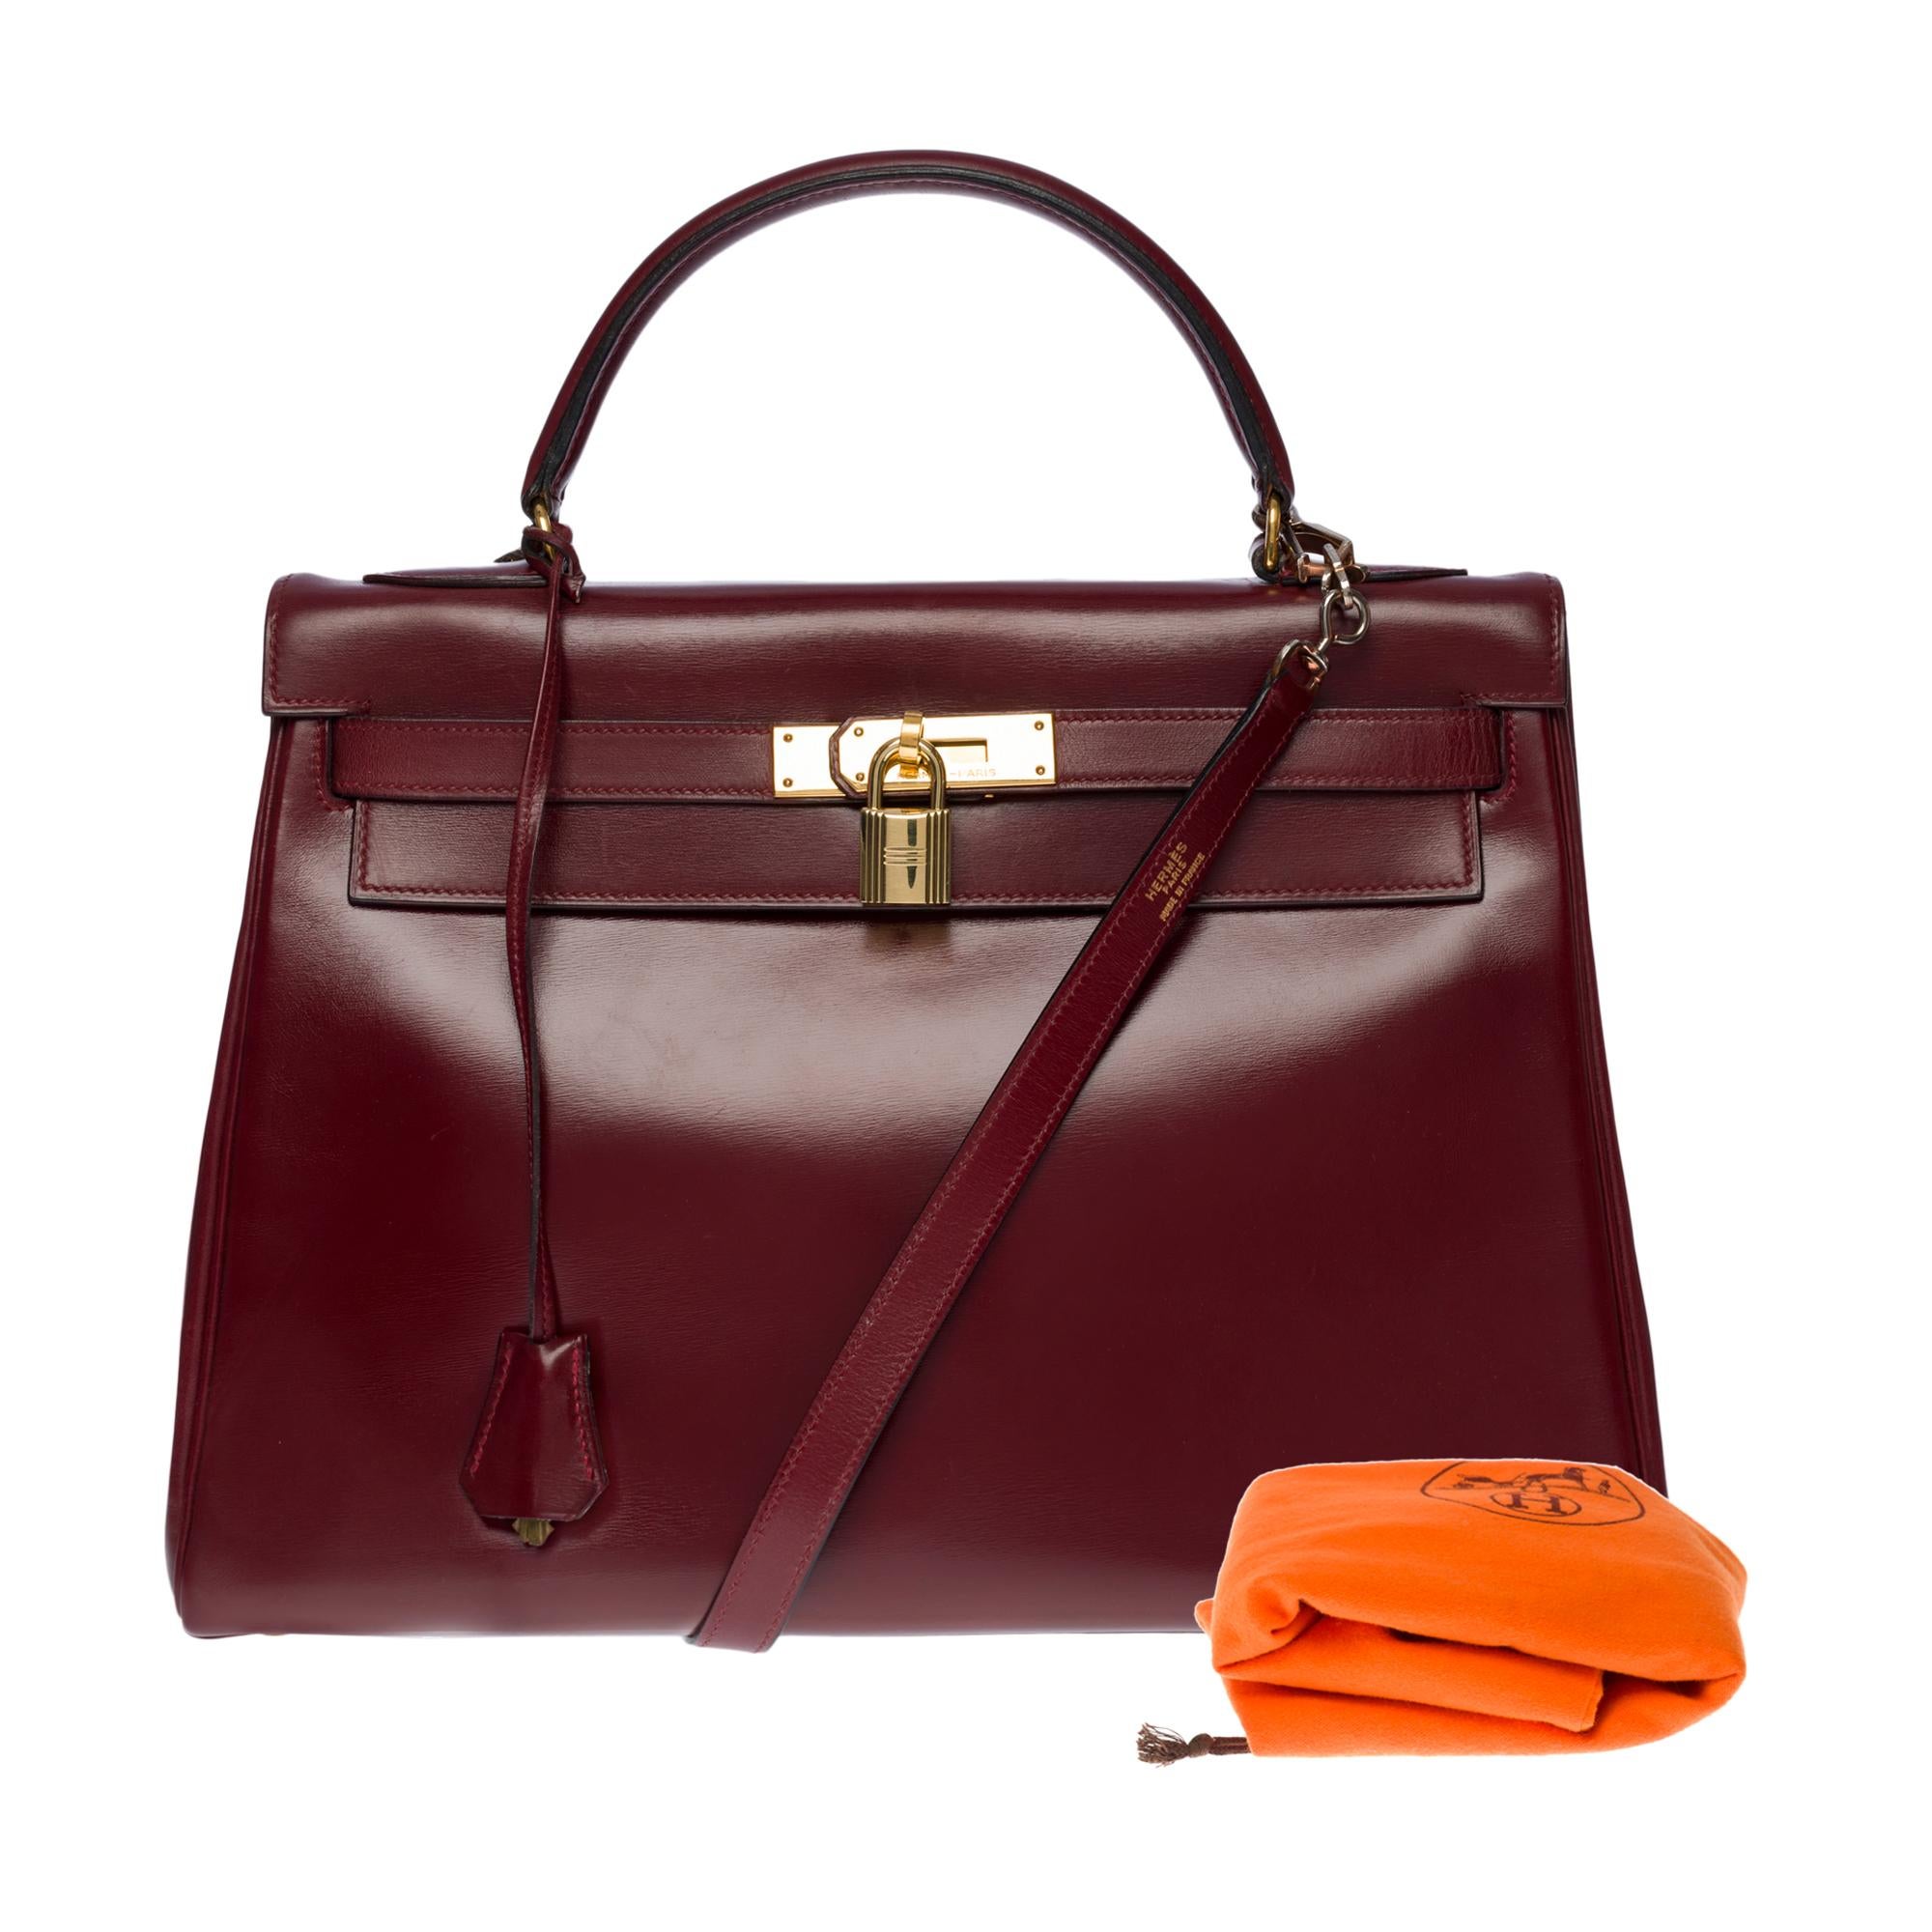 Gorgeous Hermès Kelly 32 retourne handbag strap in Burgundy Calf box leather, GHW 3